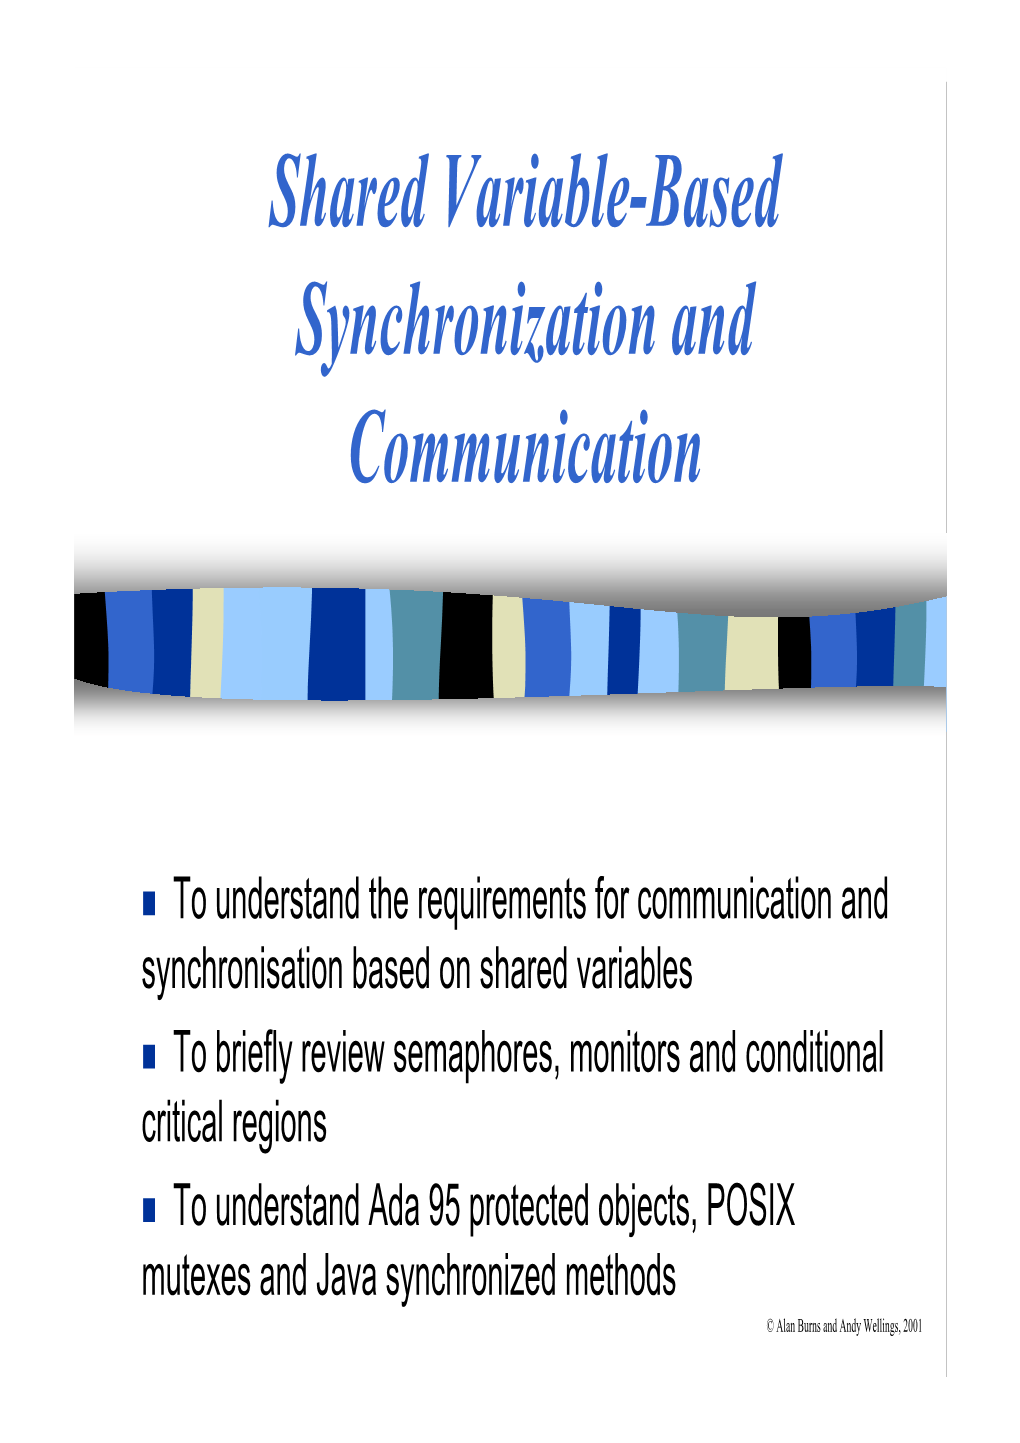 Shared Variable-Based Synchronization and Communication